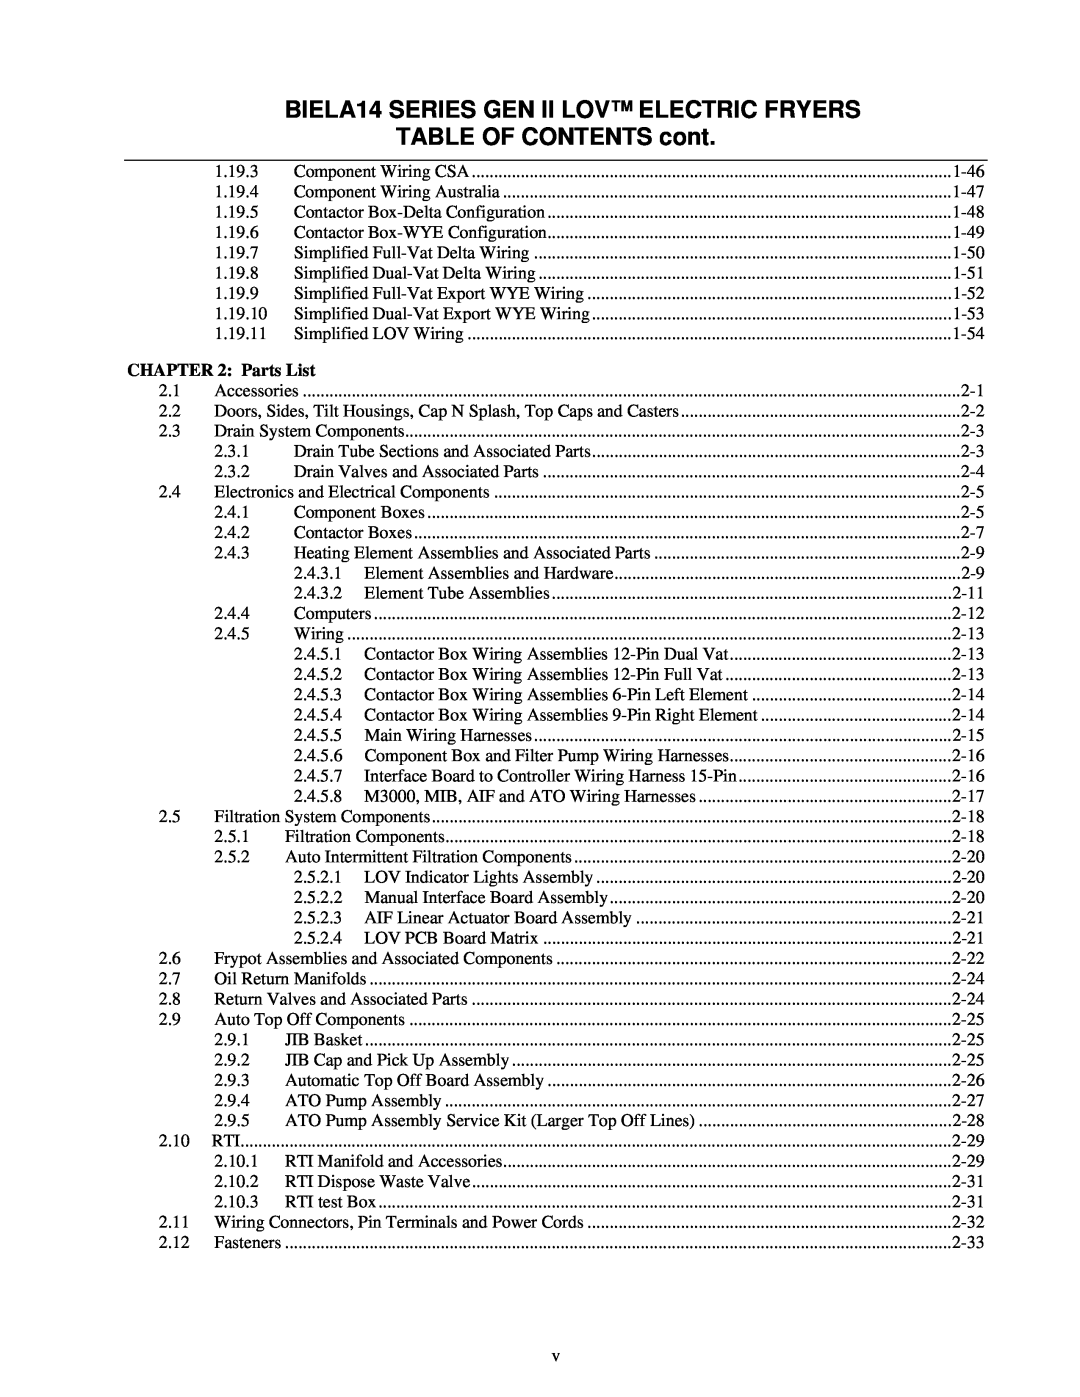 Frymaster manual TABLE OF CONTENTS cont, BIELA14 SERIES GEN II LOV ELECTRIC FRYERS, Parts List 